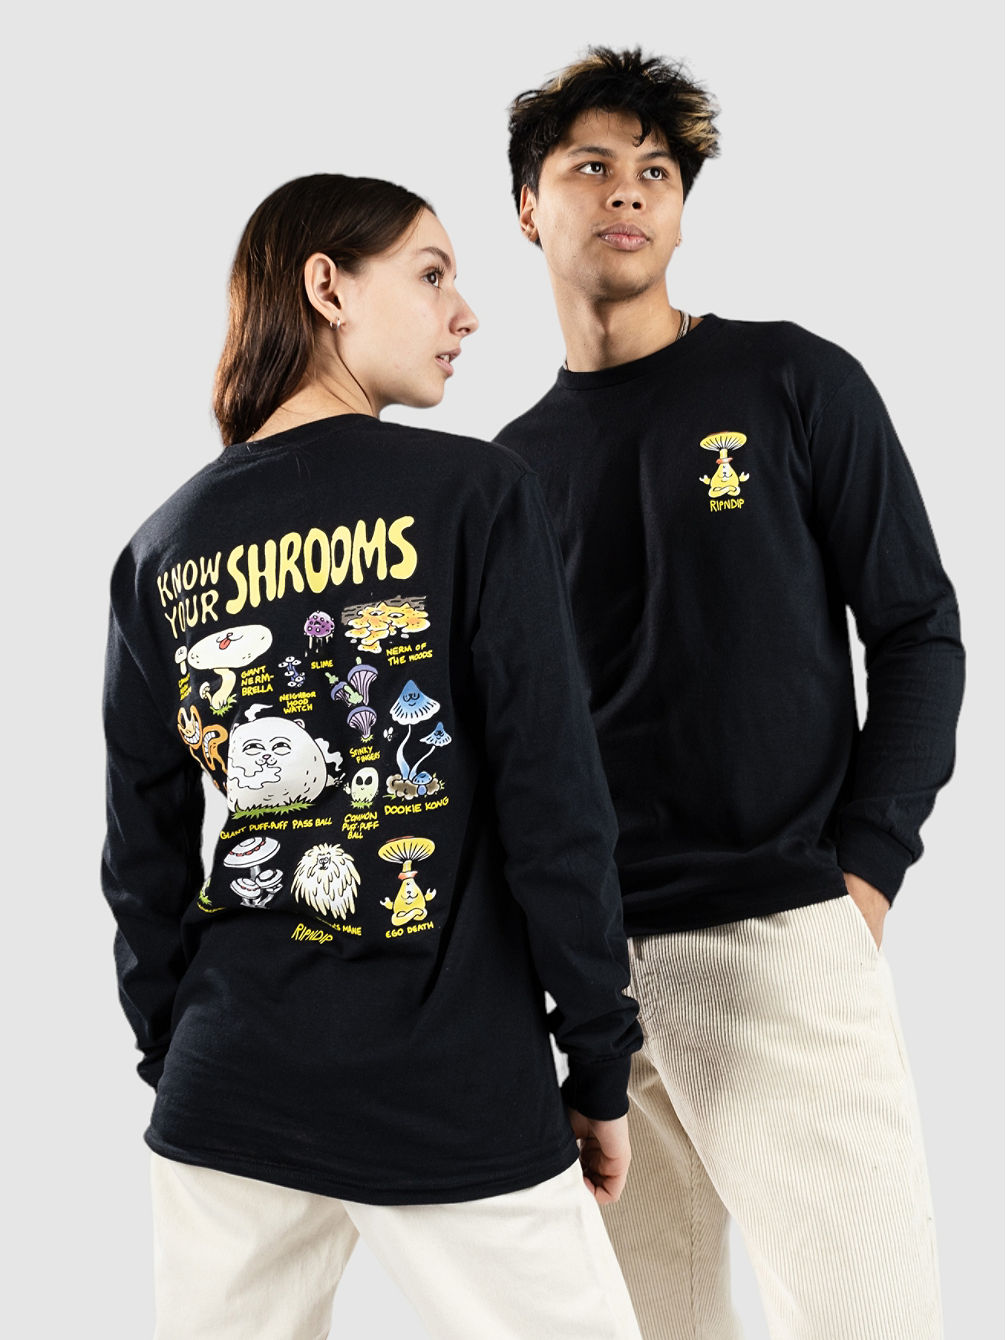 Know Ur Shrooms T-Shirt